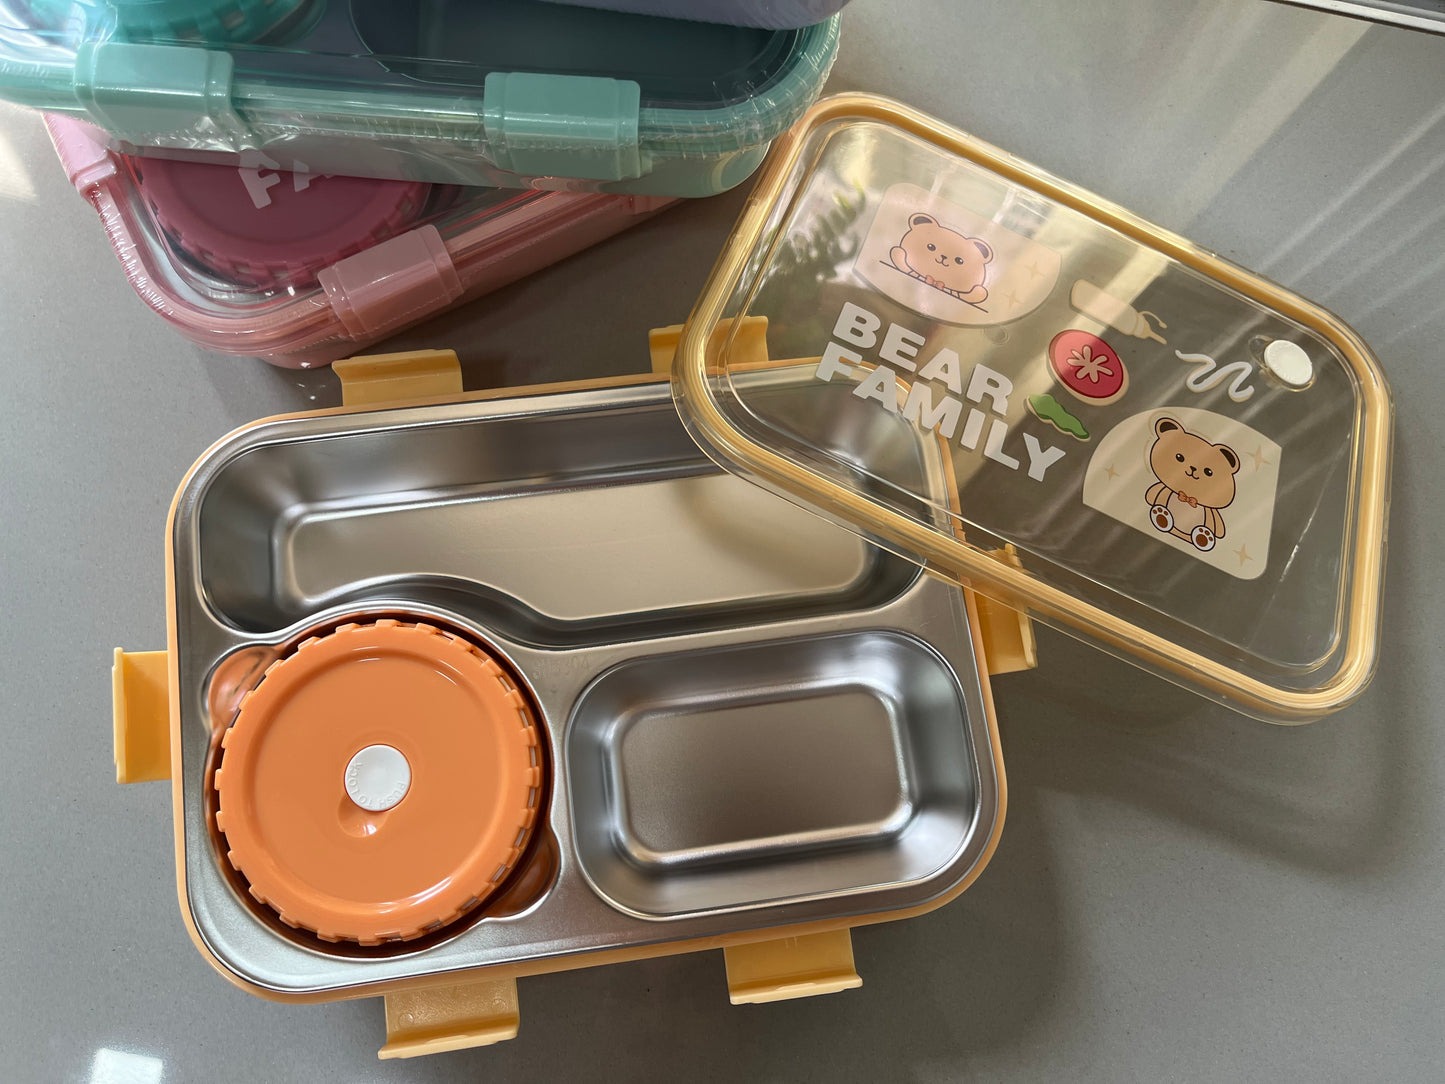 Bear Family Bento Lunch Box